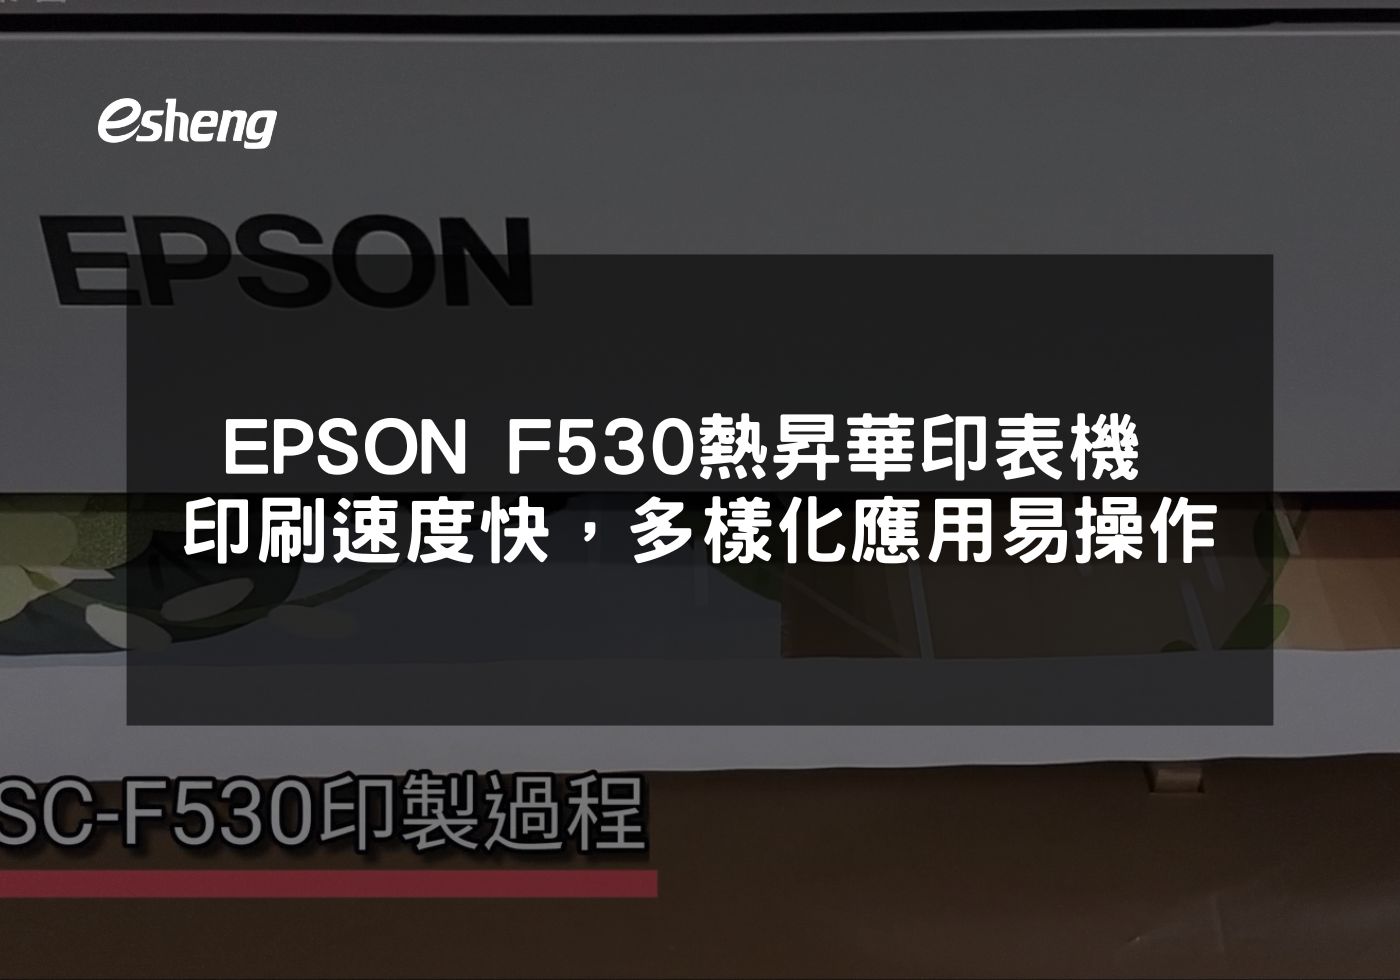 EPSON F530熱昇華印表機實現高效率快速印刷